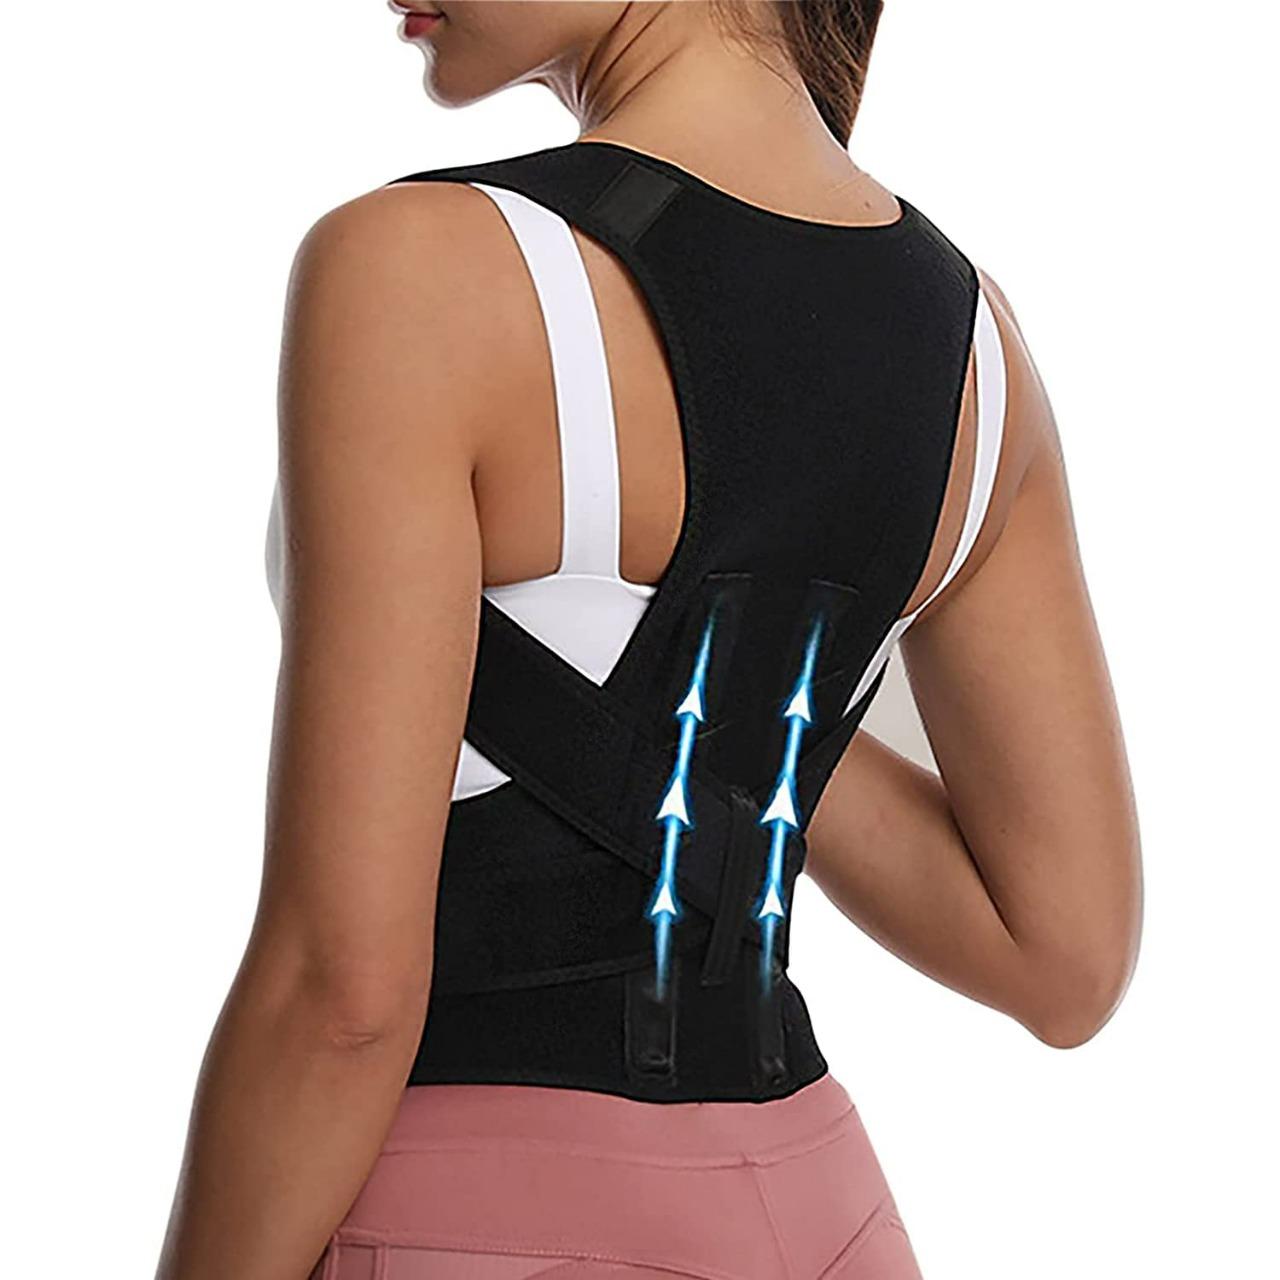 Back & Abdomen Support Pain Relief Posture Corrector Belt